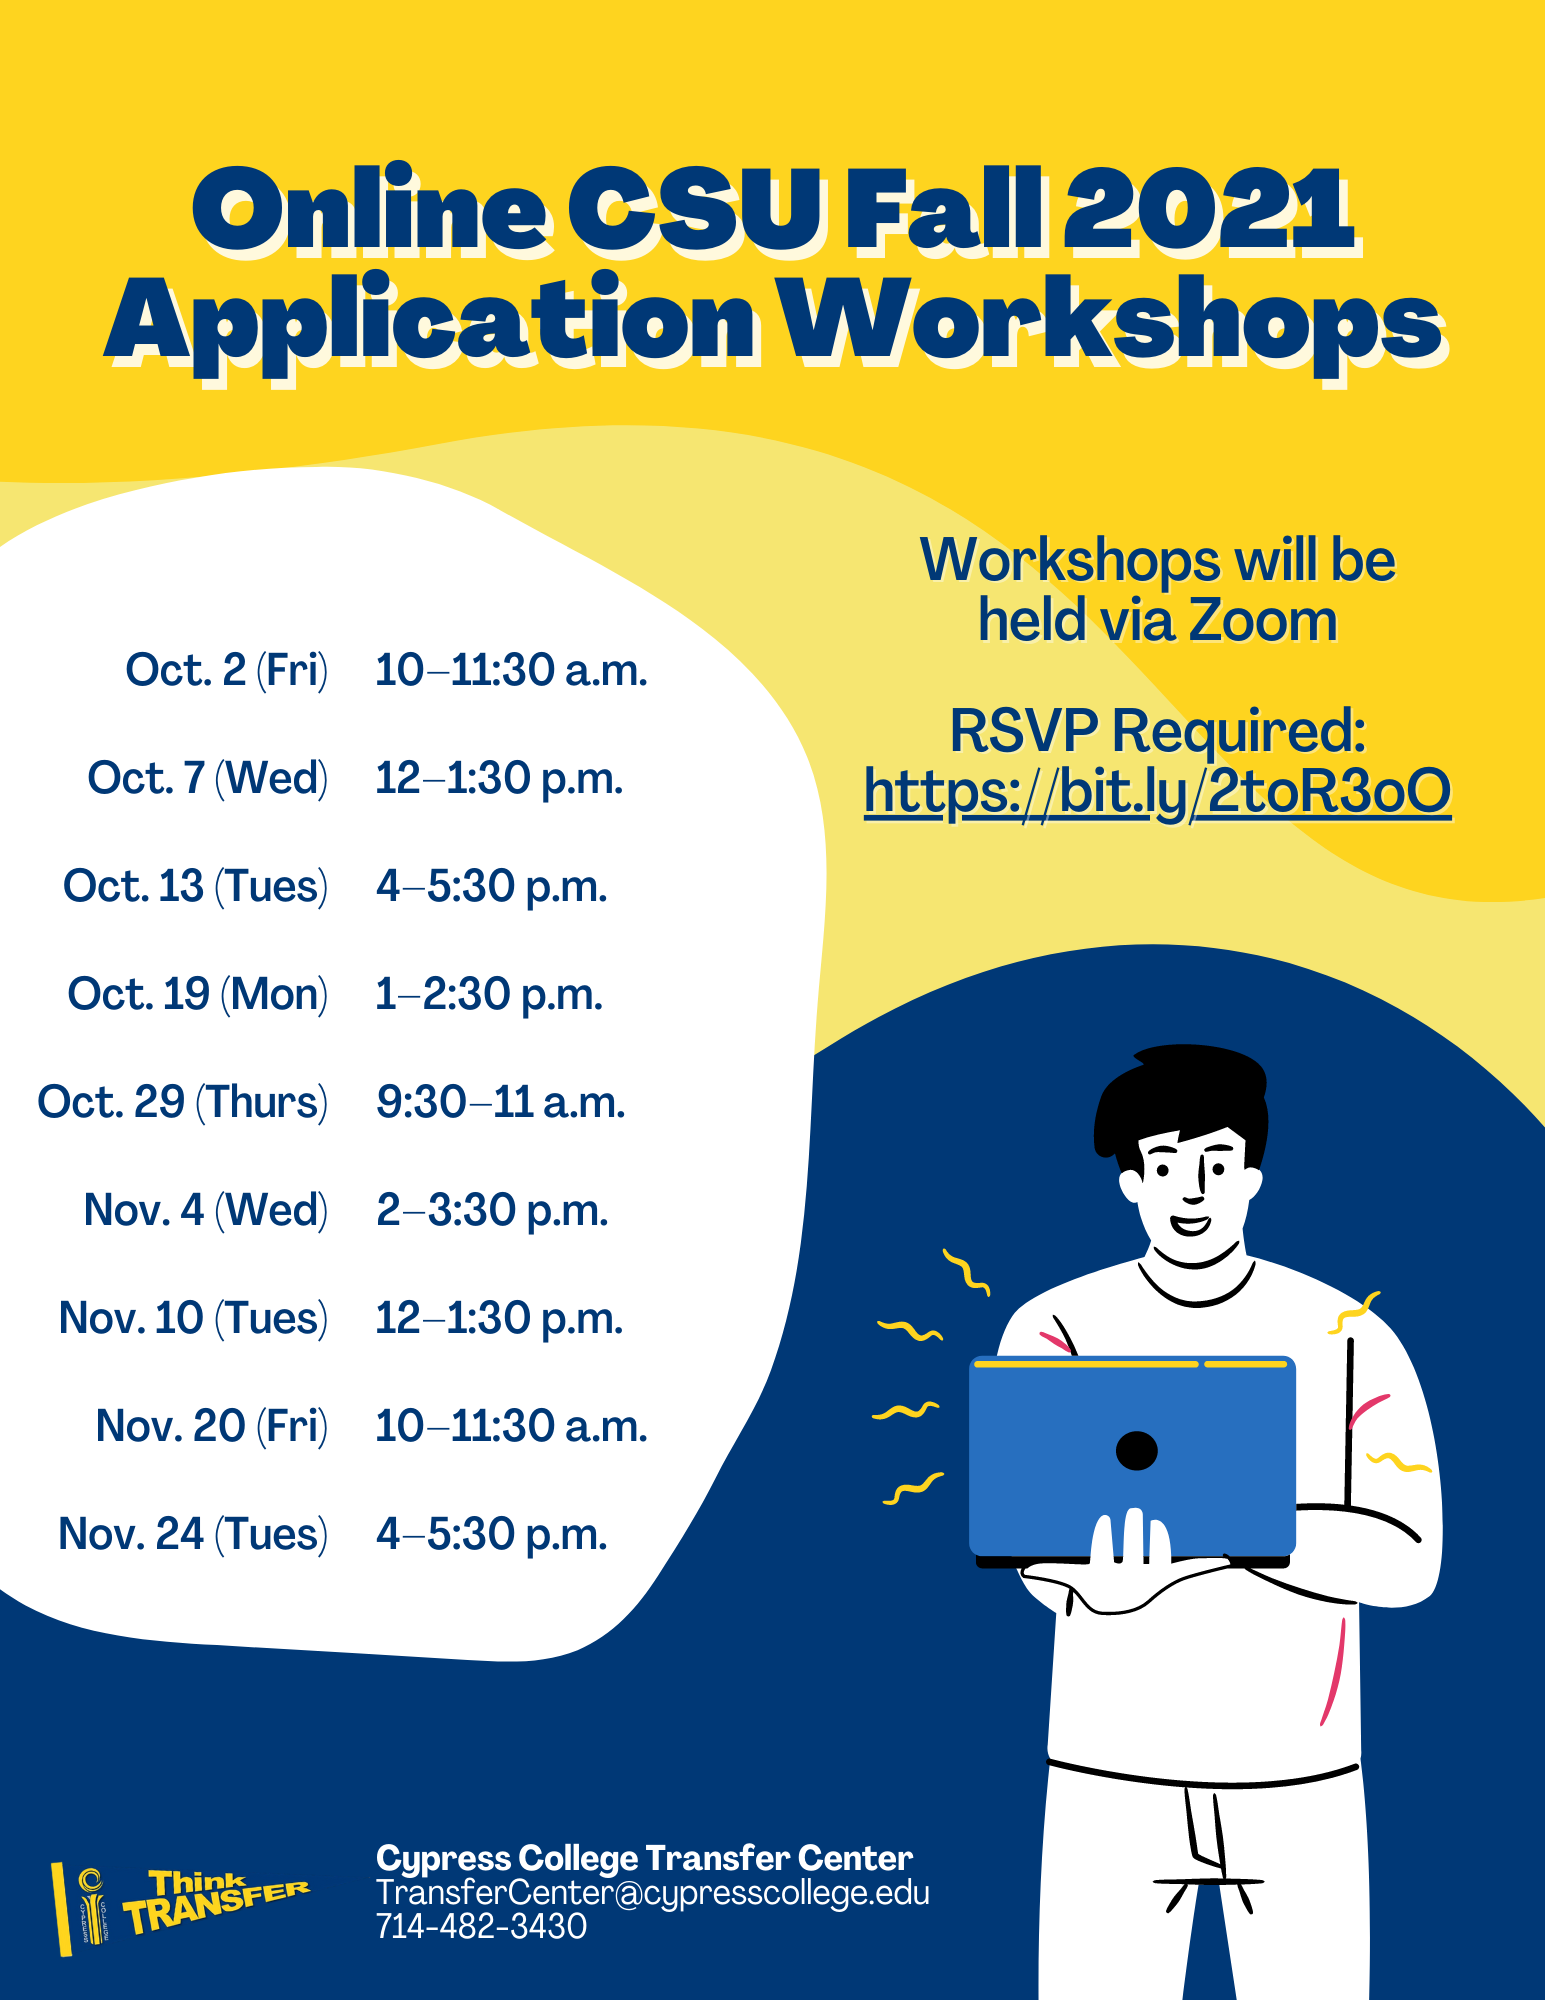 Online CSU Fall 2021 Application Workshops flyer